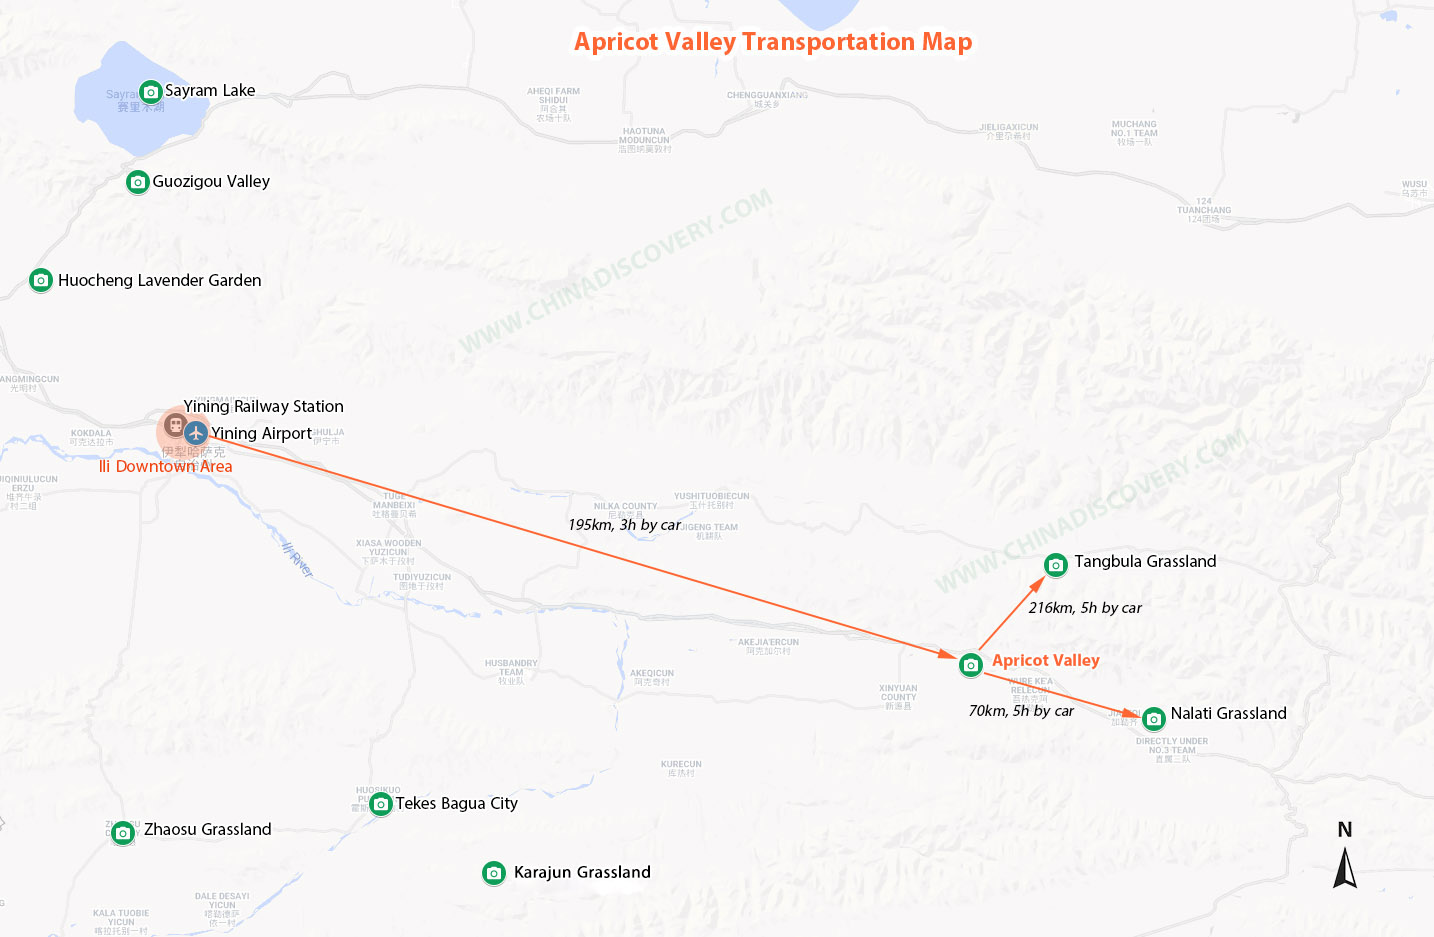 Apricot Valley Transportation Map